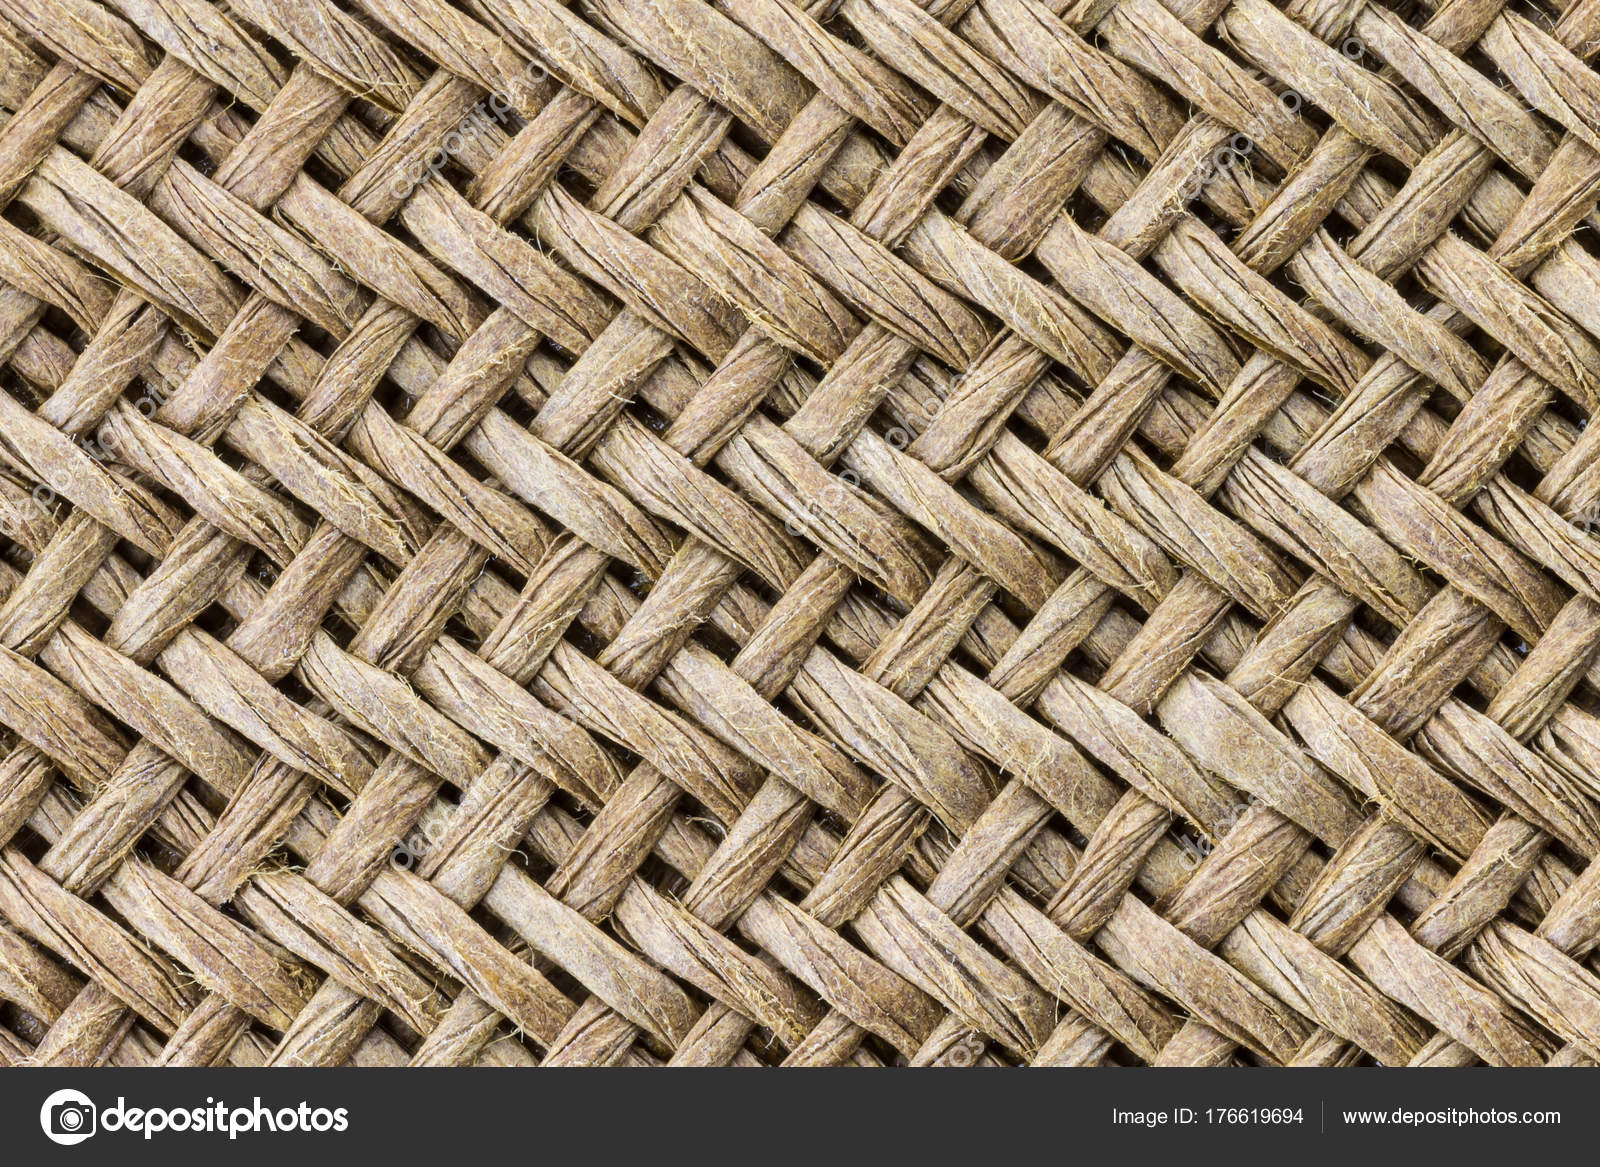 woven texture, Free stock photos - Rgbstock - Free stock images, Zela